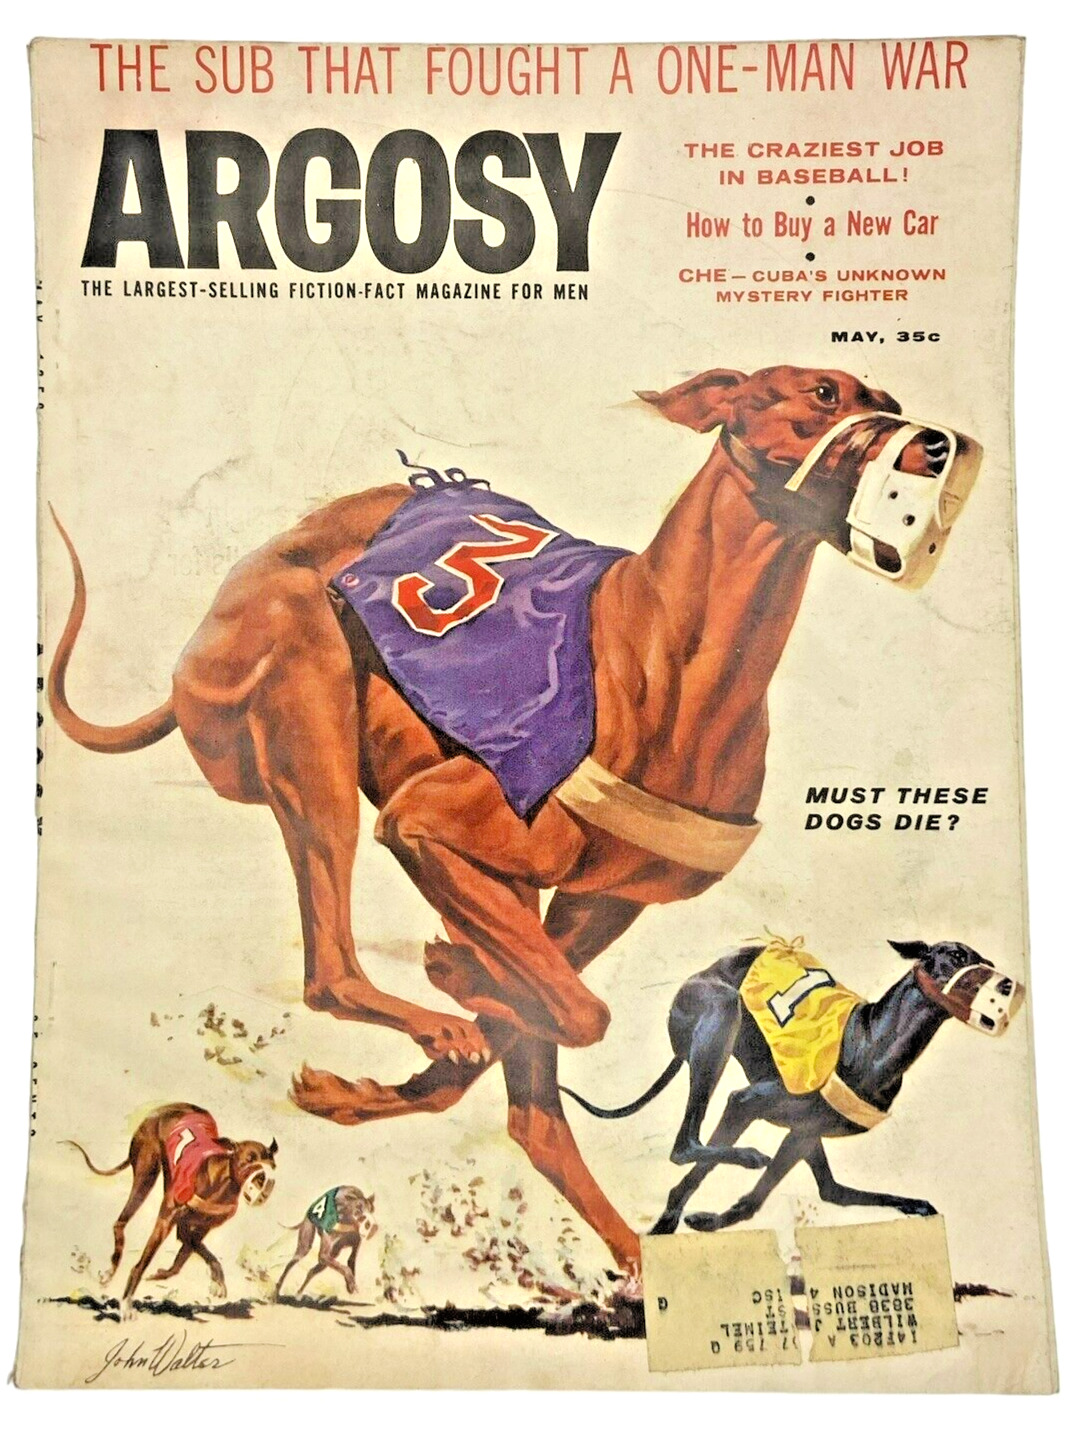 Argosy The Complete Man's Magazine May 1956